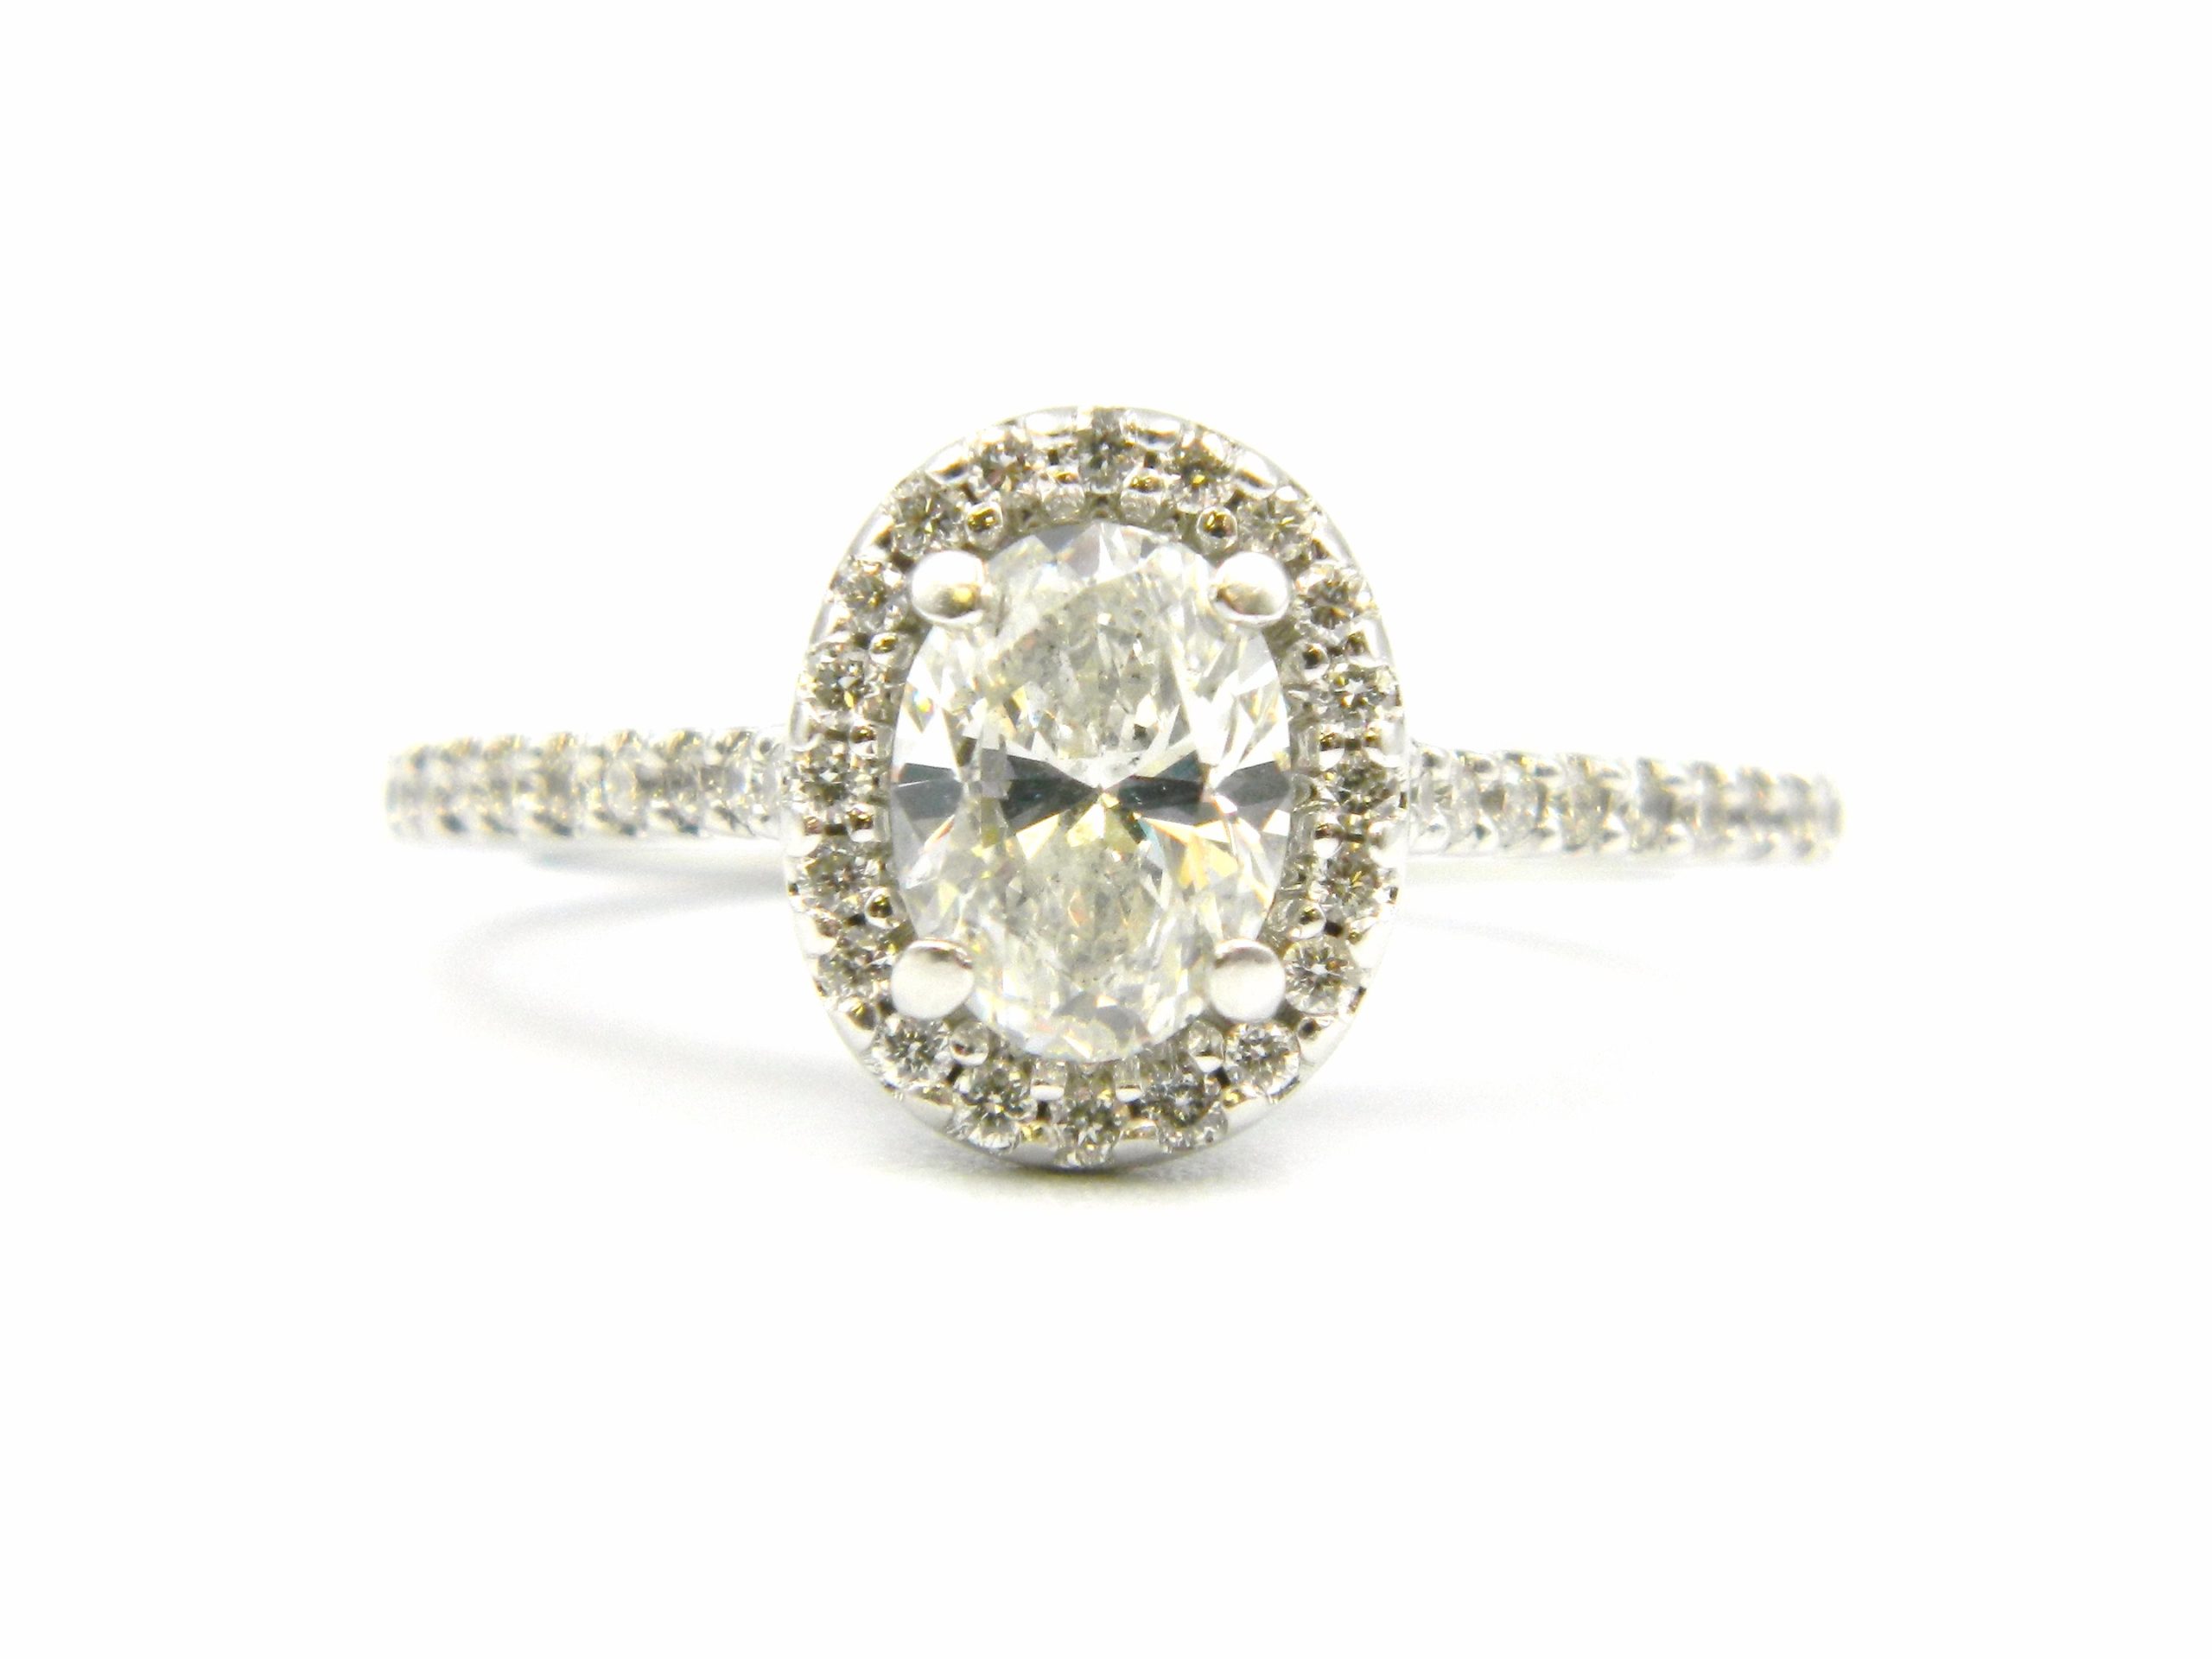 Estate: White Gold Diamond Engagement Ring